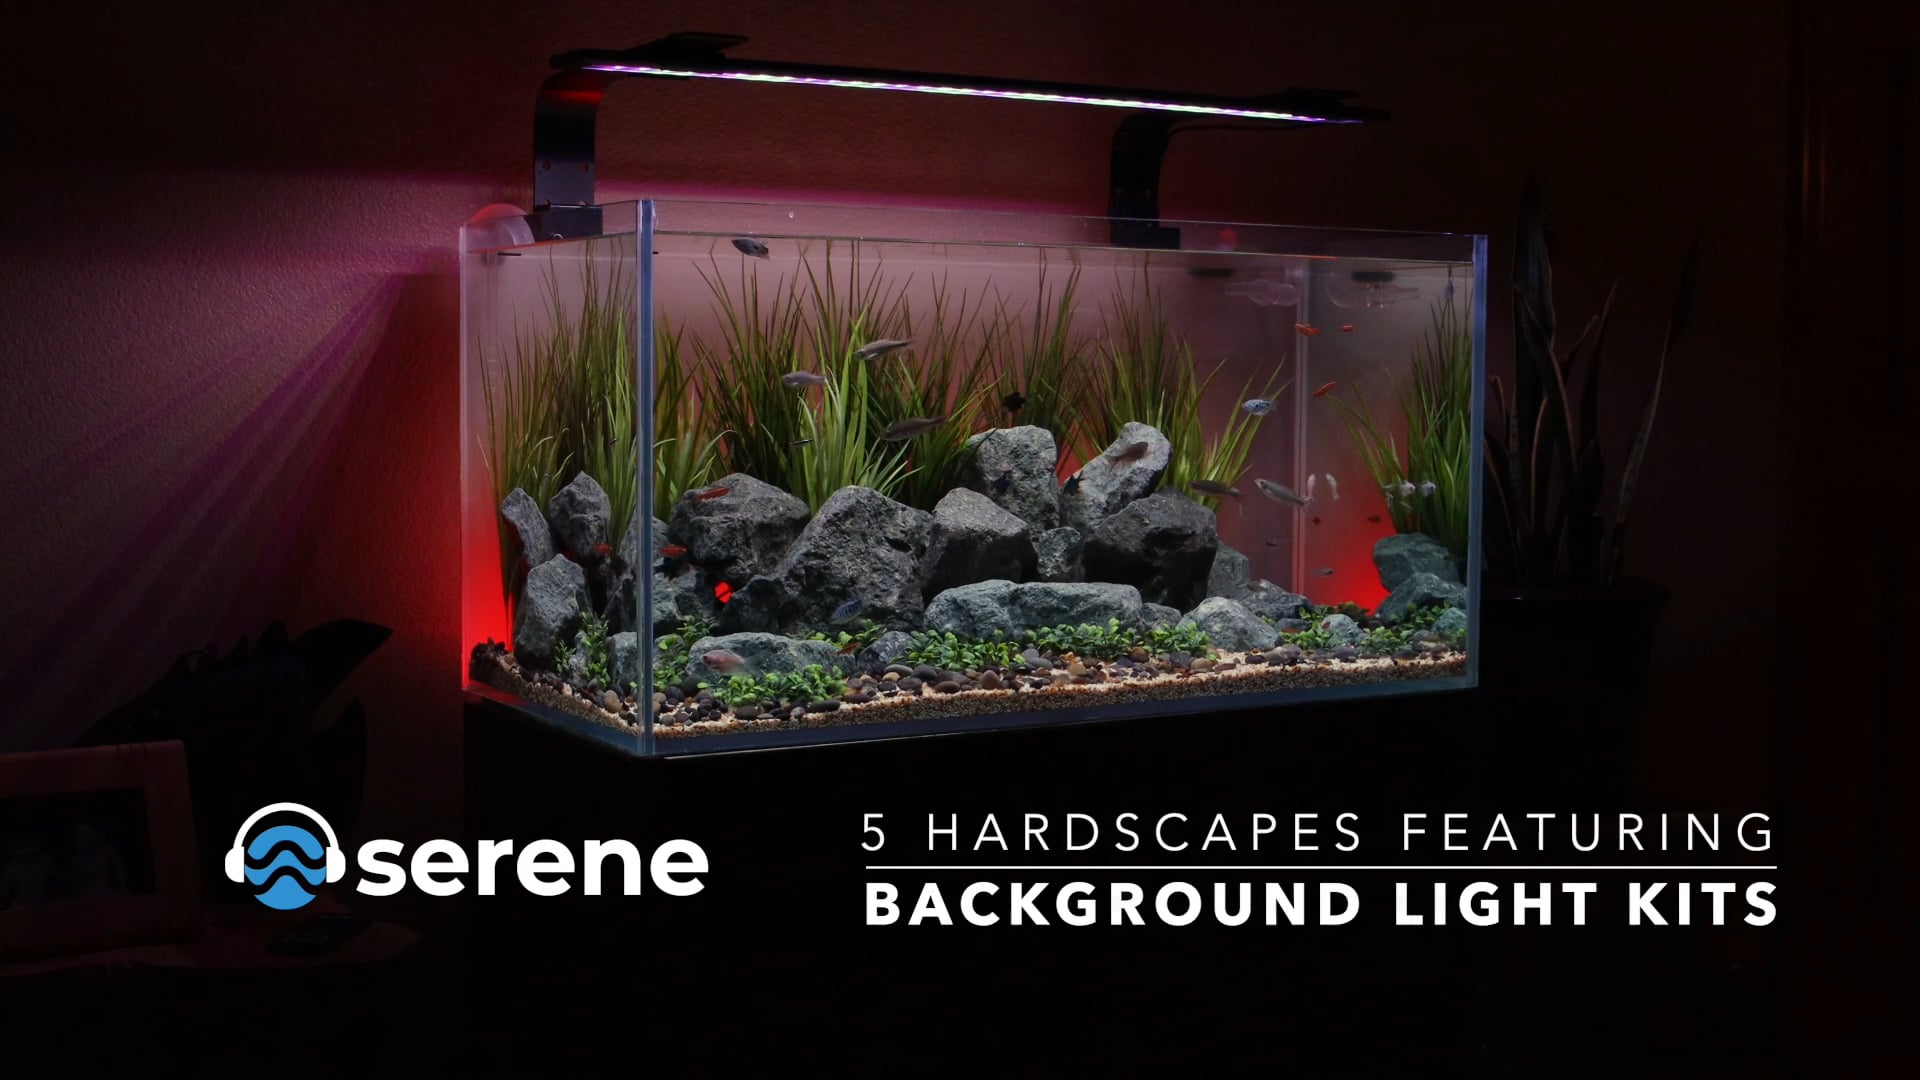 Serene Background LED Light Kits - Aquascapes background lights on Vimeo